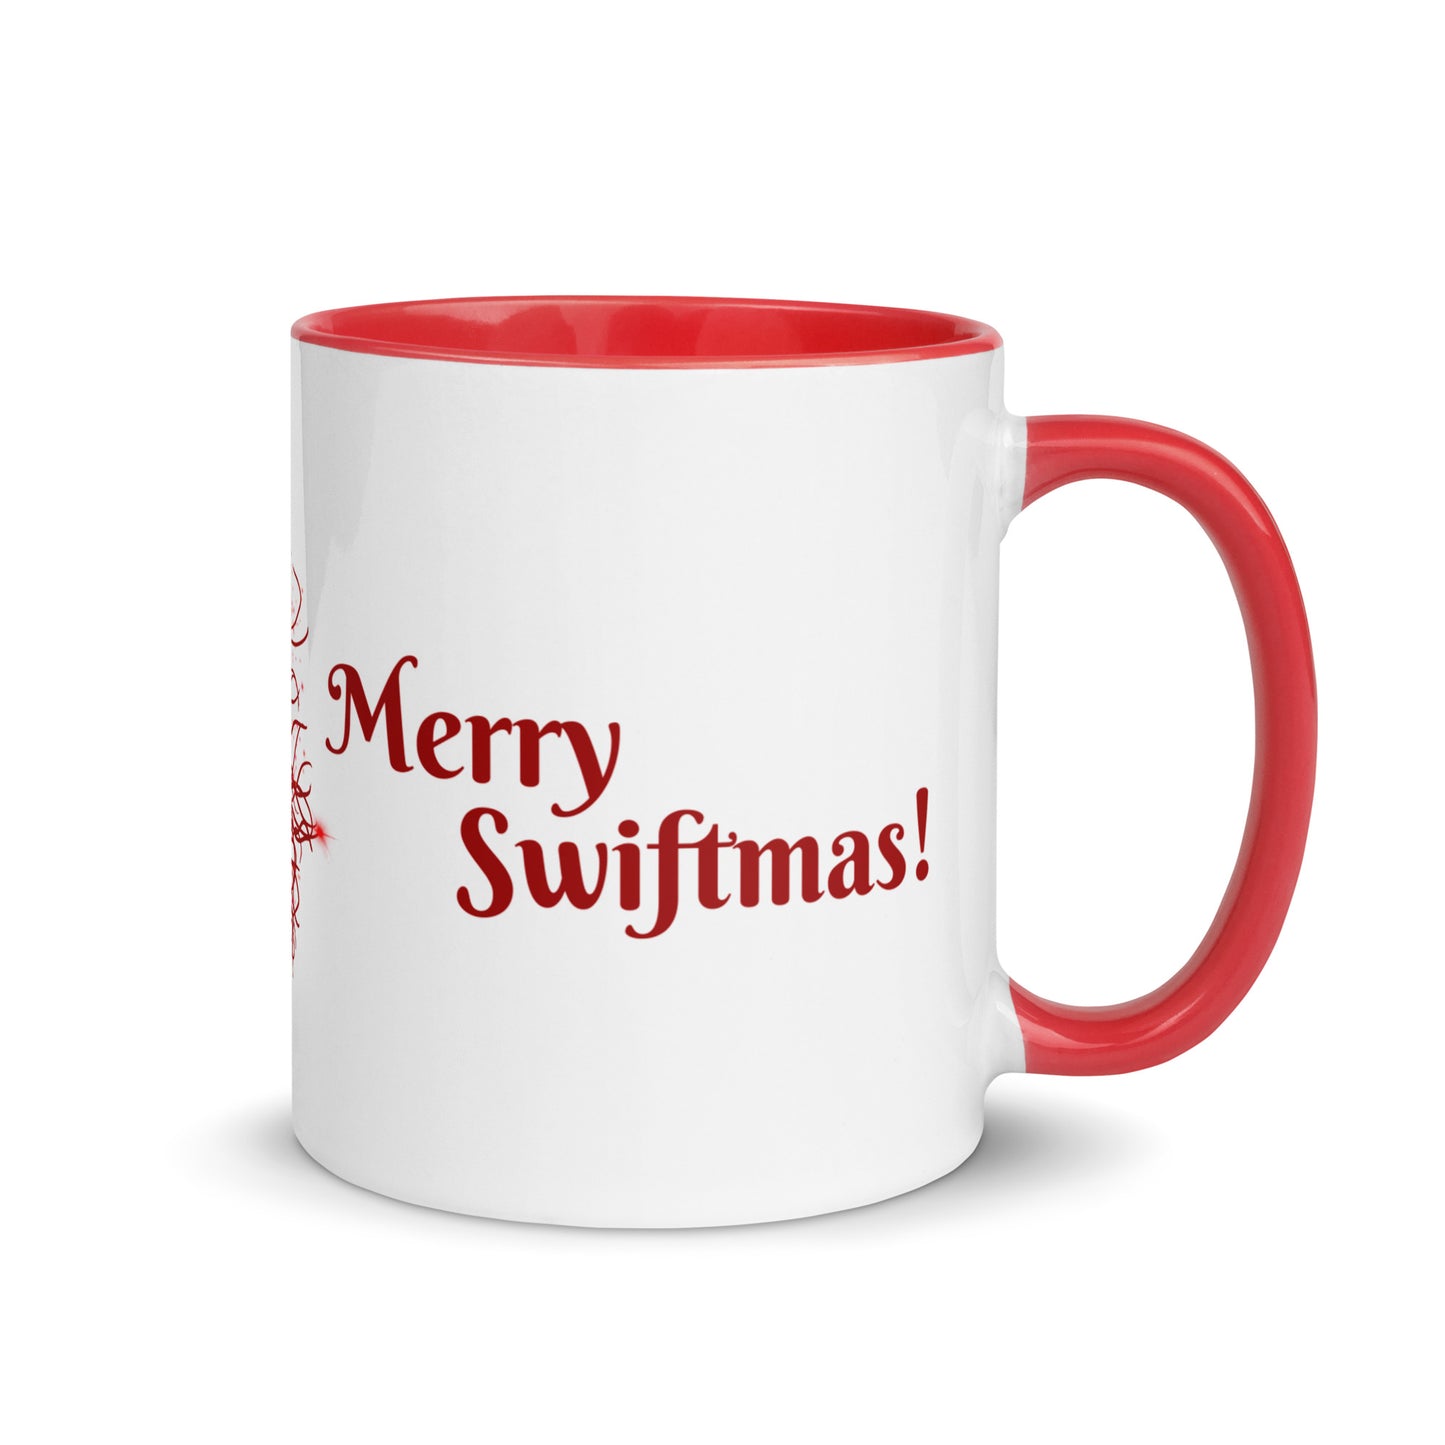 Merry SWIFTmas Mug